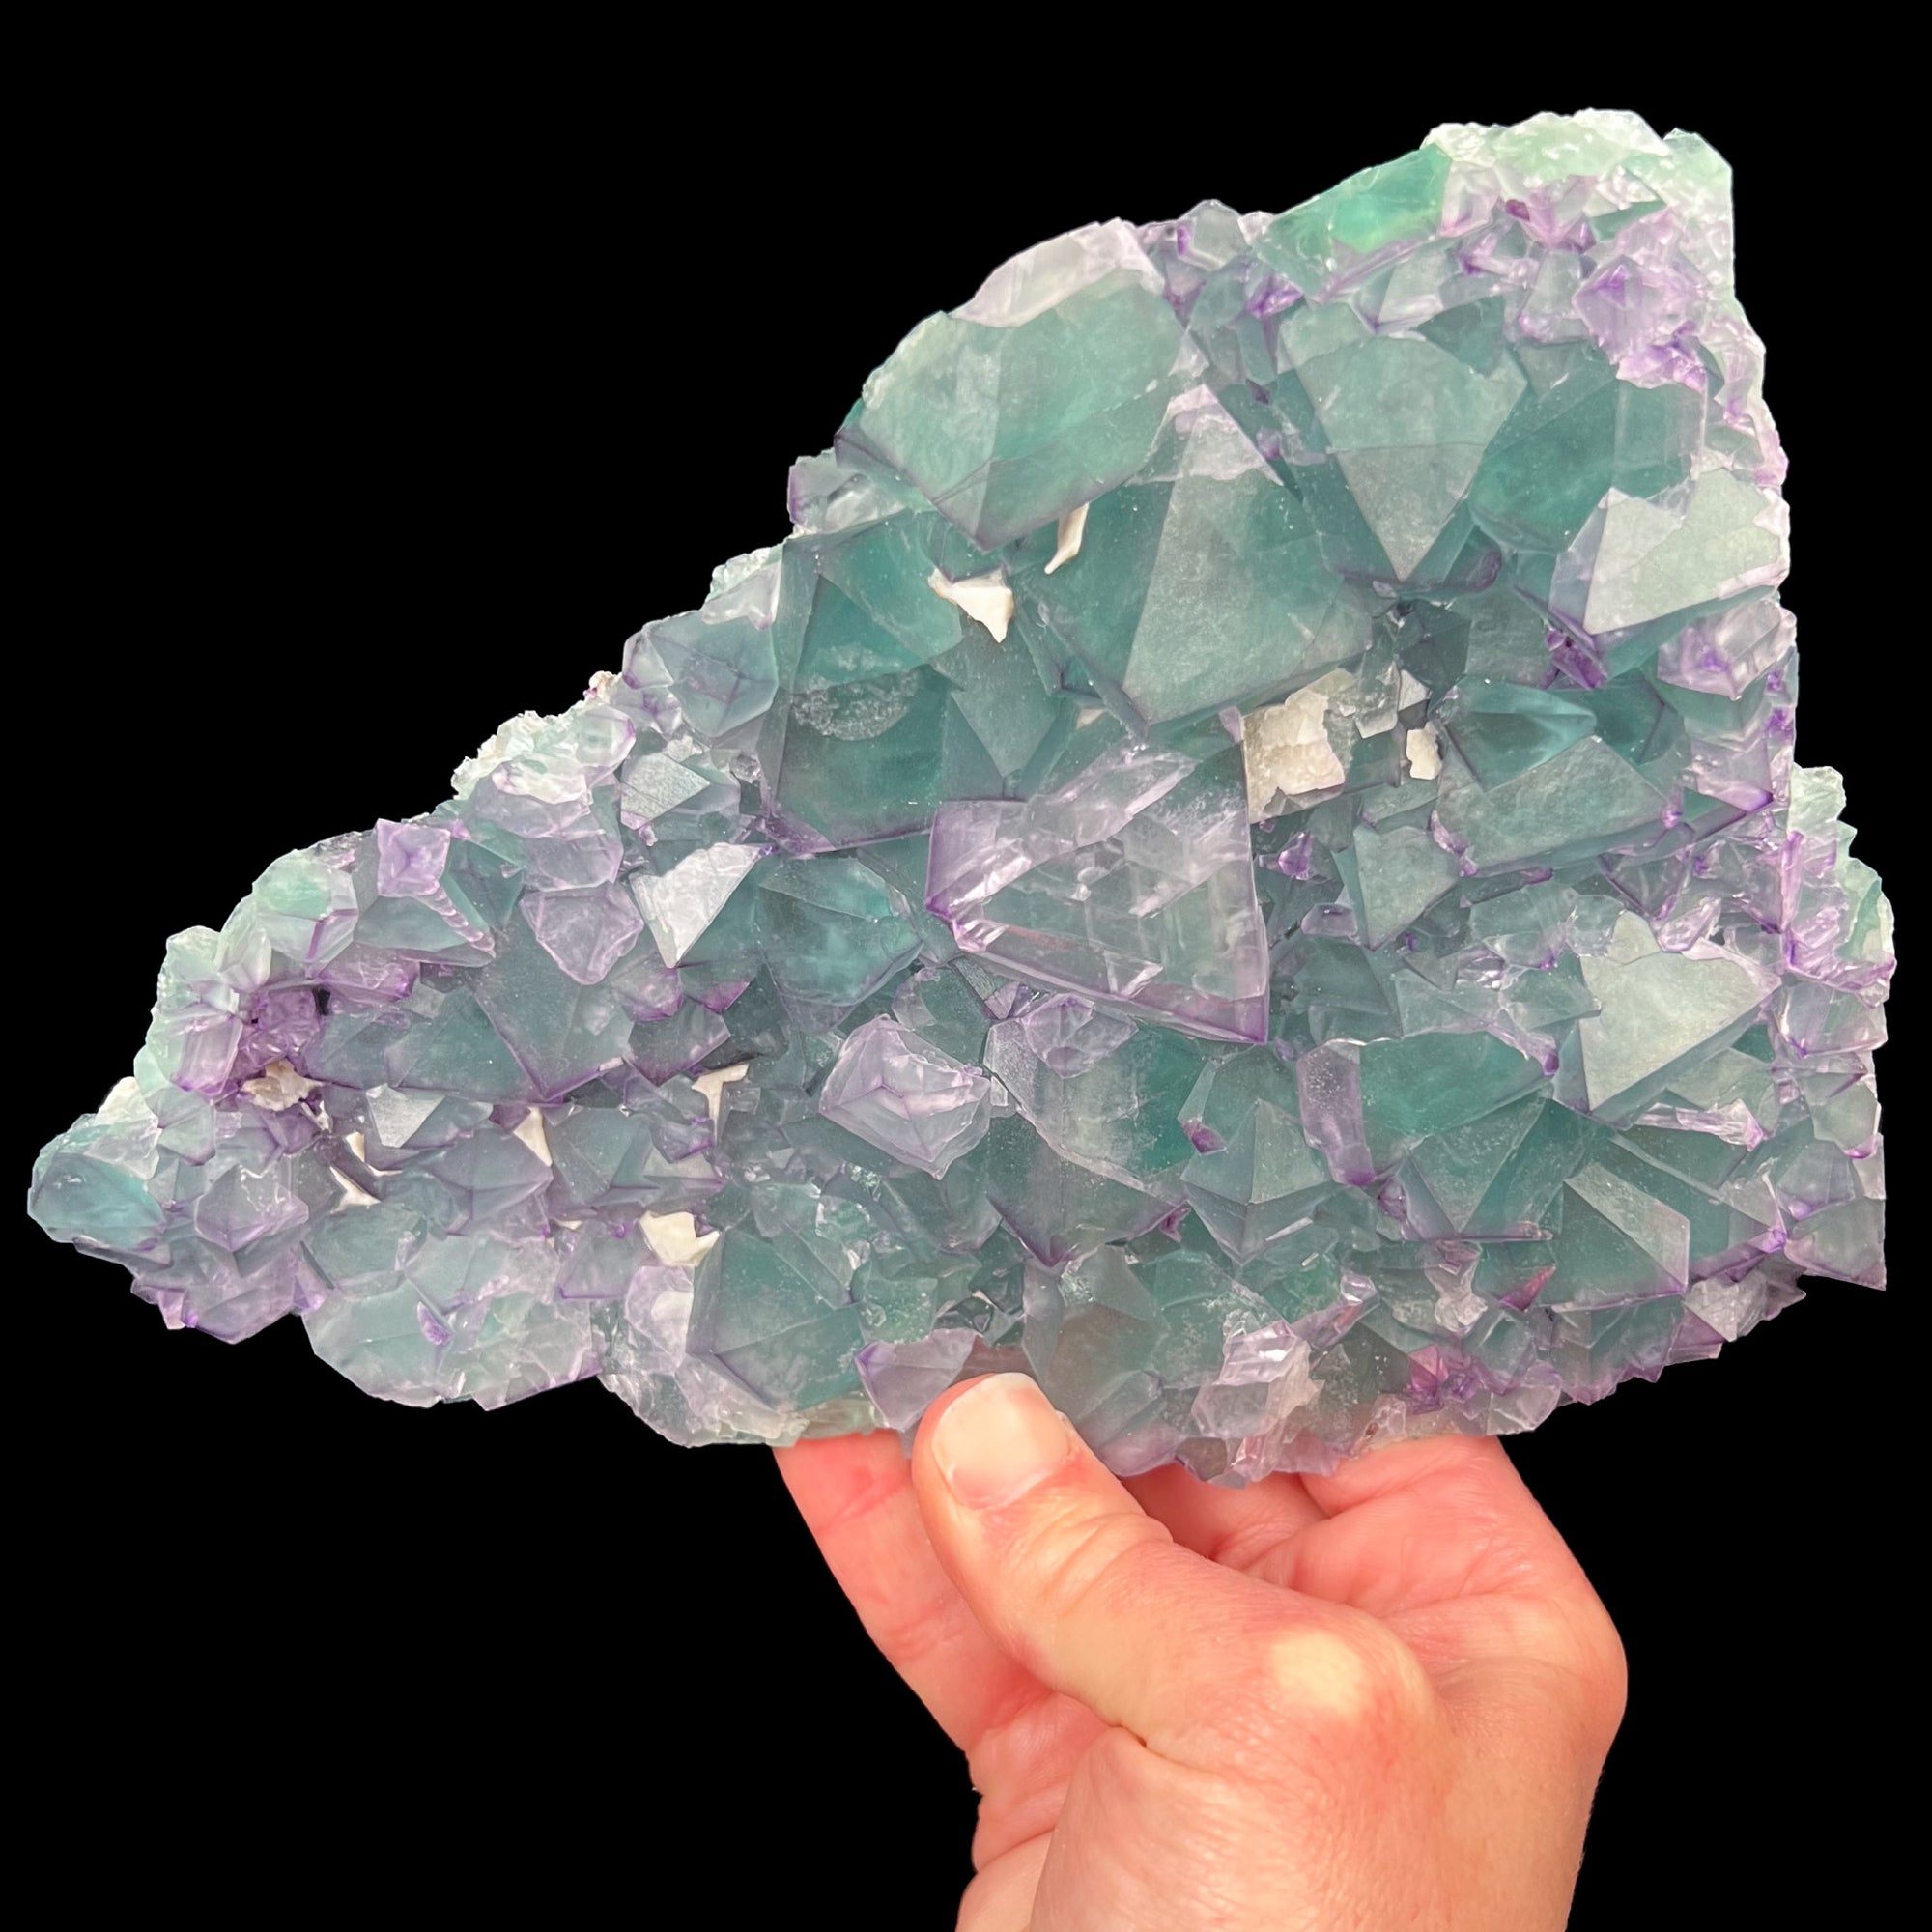 Large Fluorite Octahedron Crystal Specimen